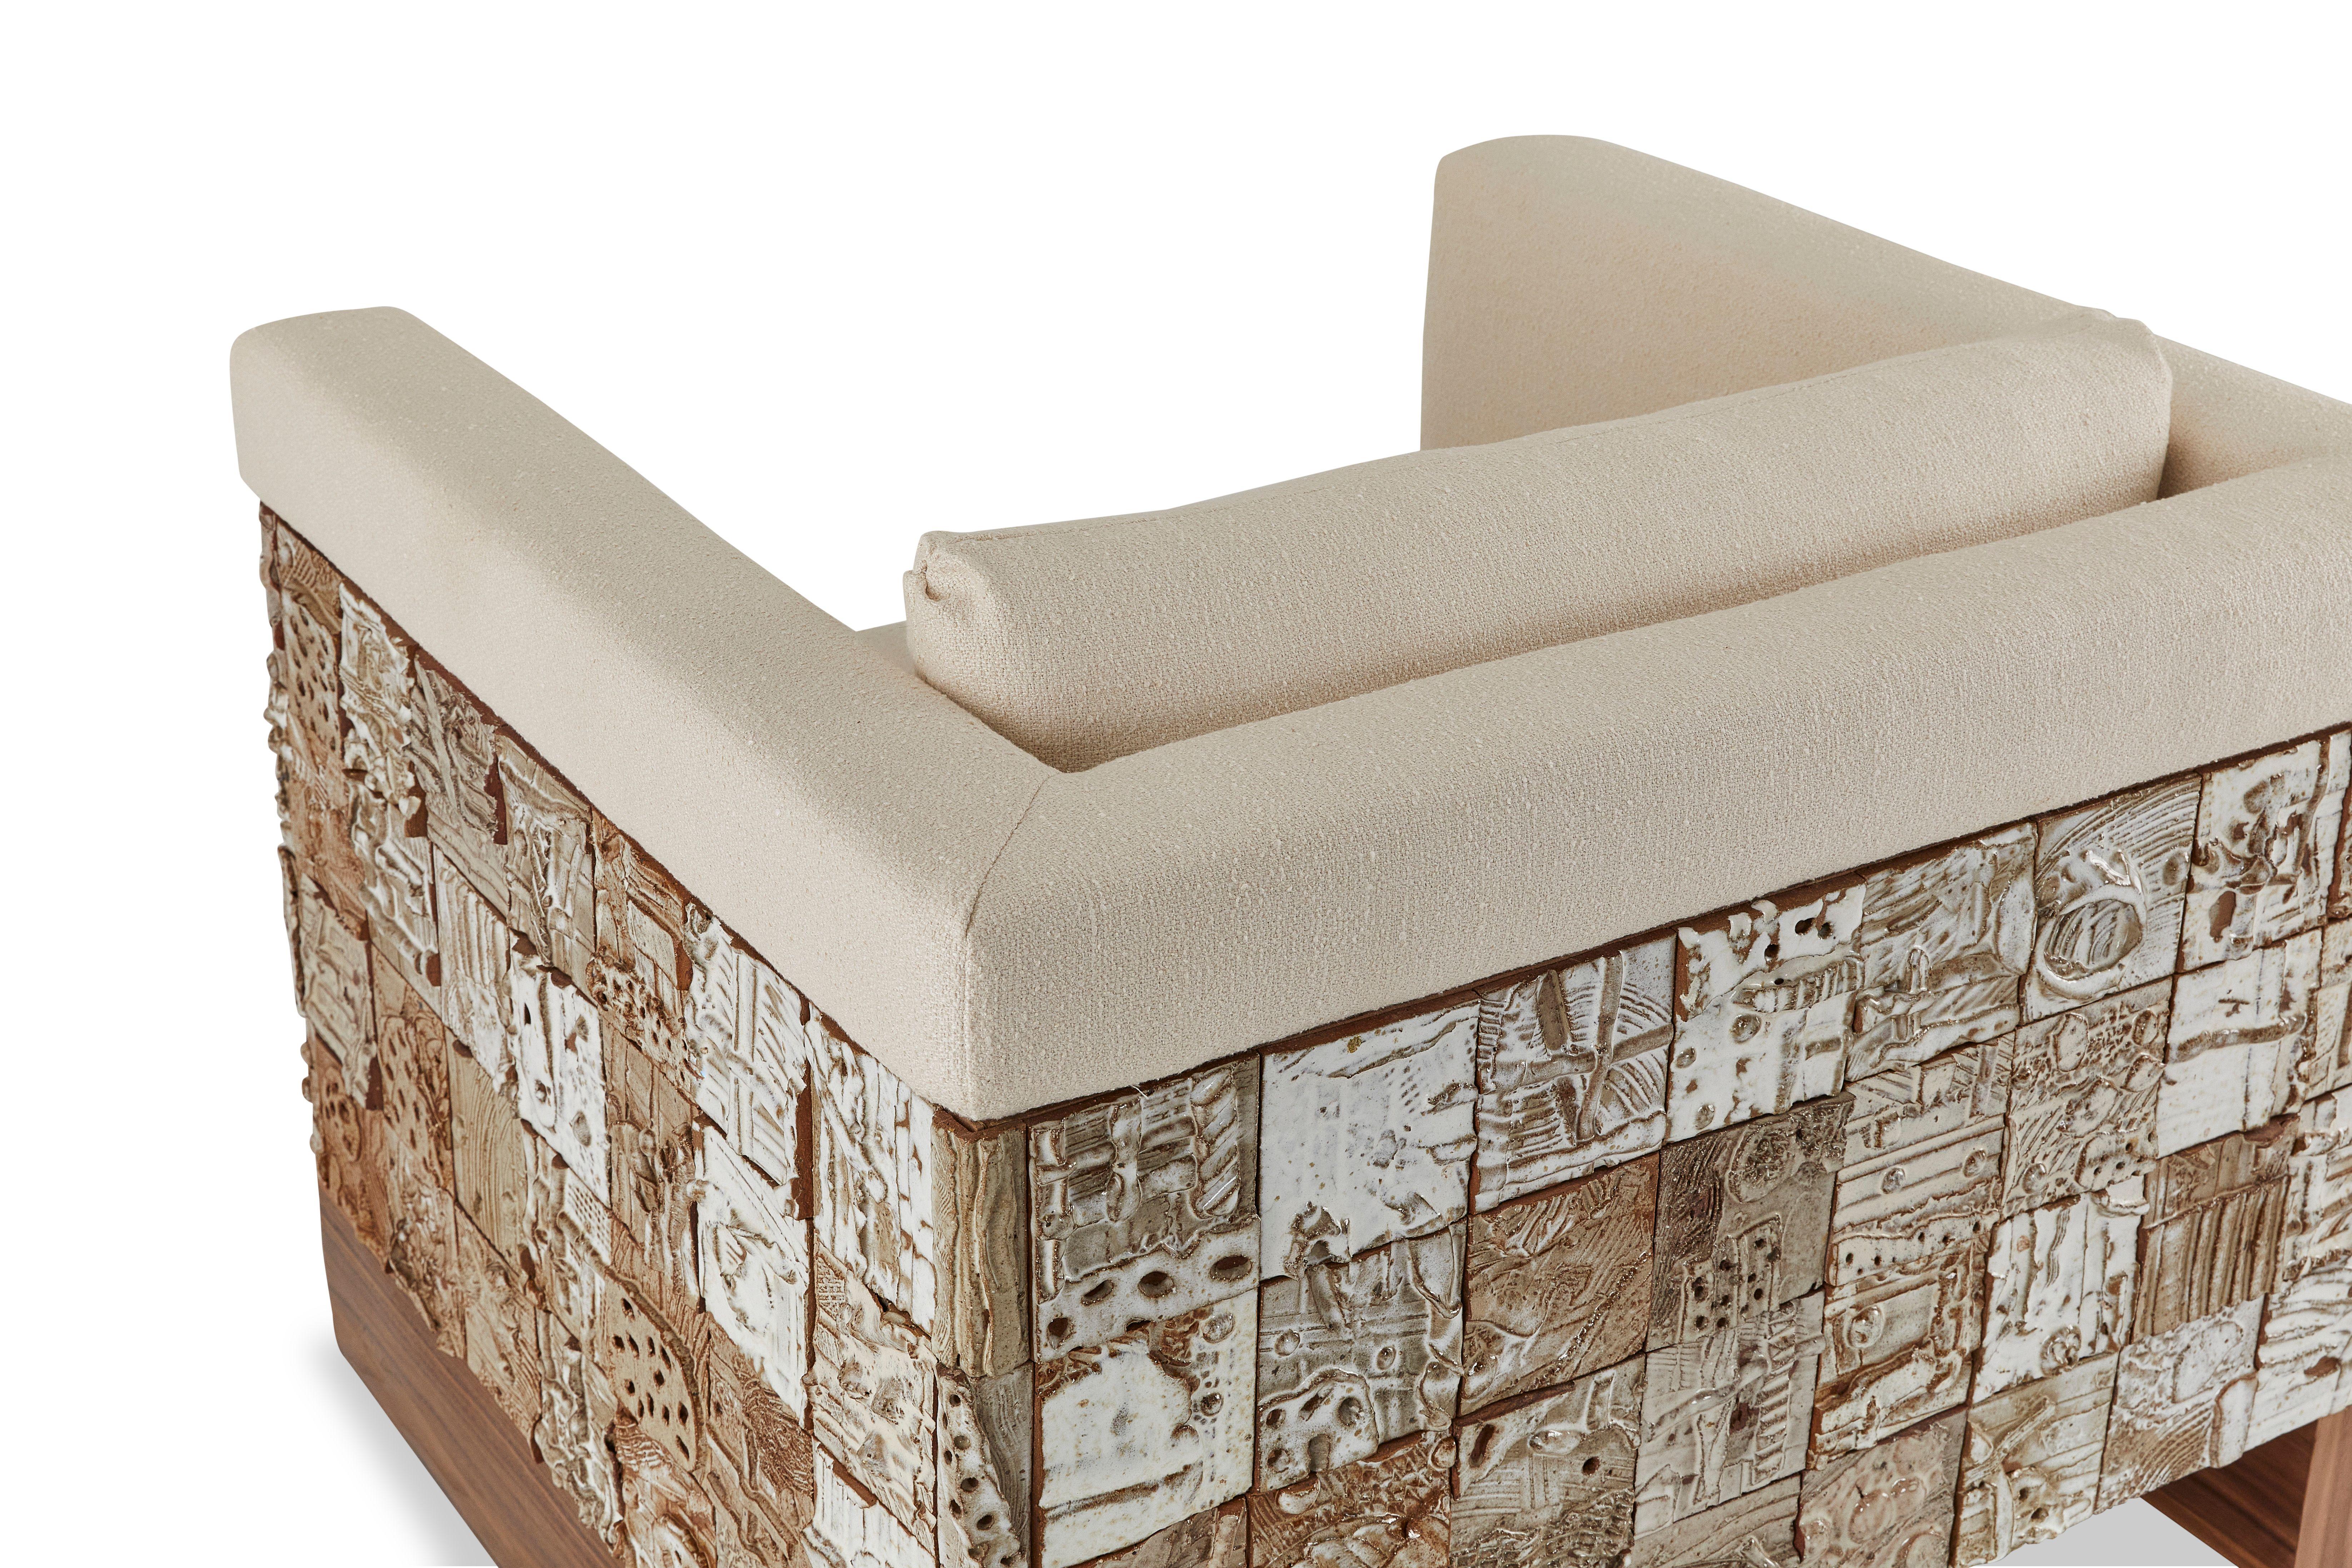 Ceramic Stellar Lounge Chair by Egg Designs